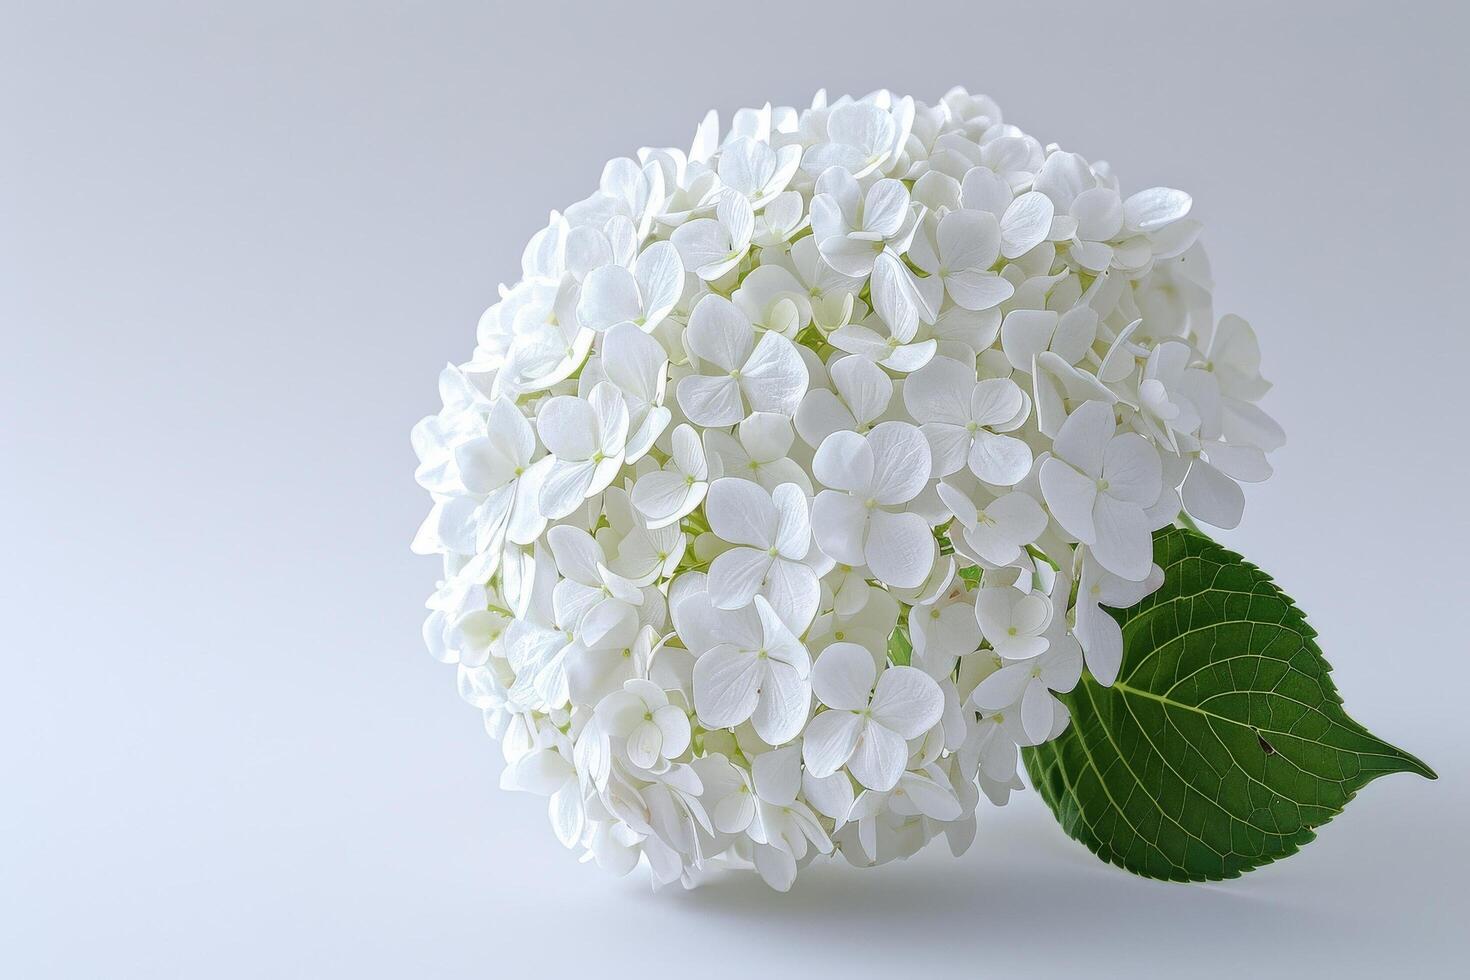 White Hydrangea Bloom Close Up photo